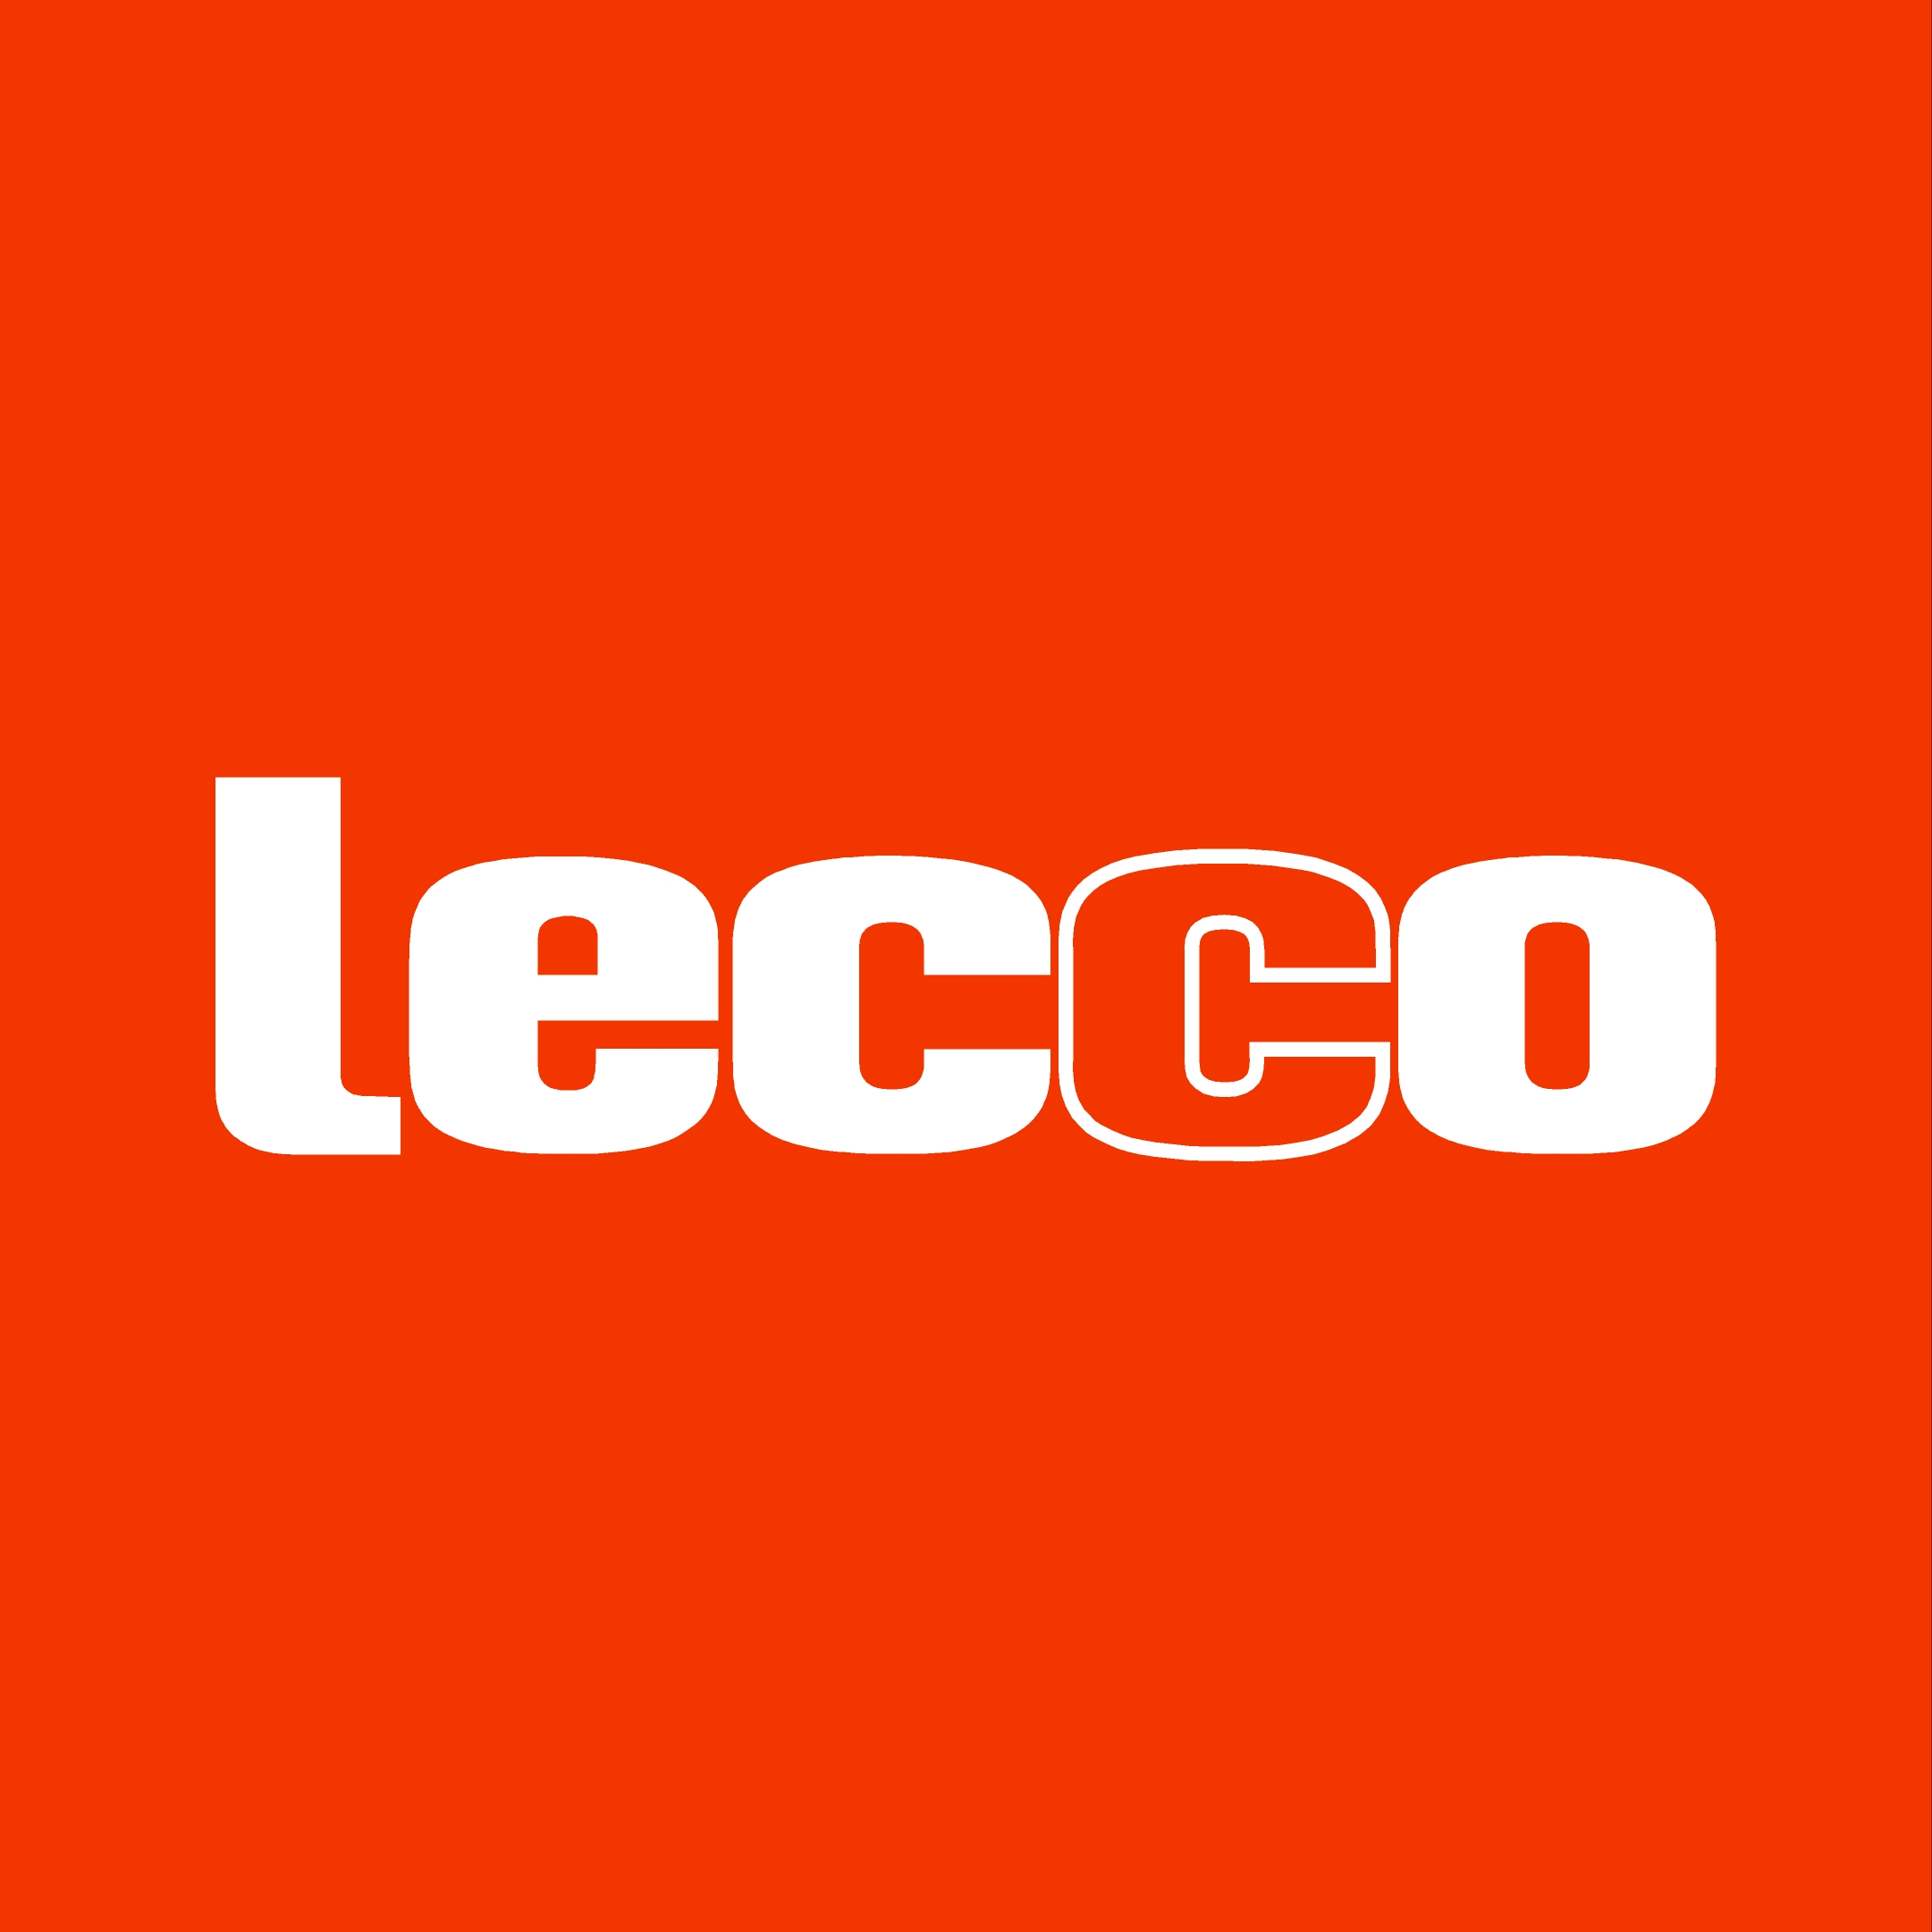 Logo Lecco Orange